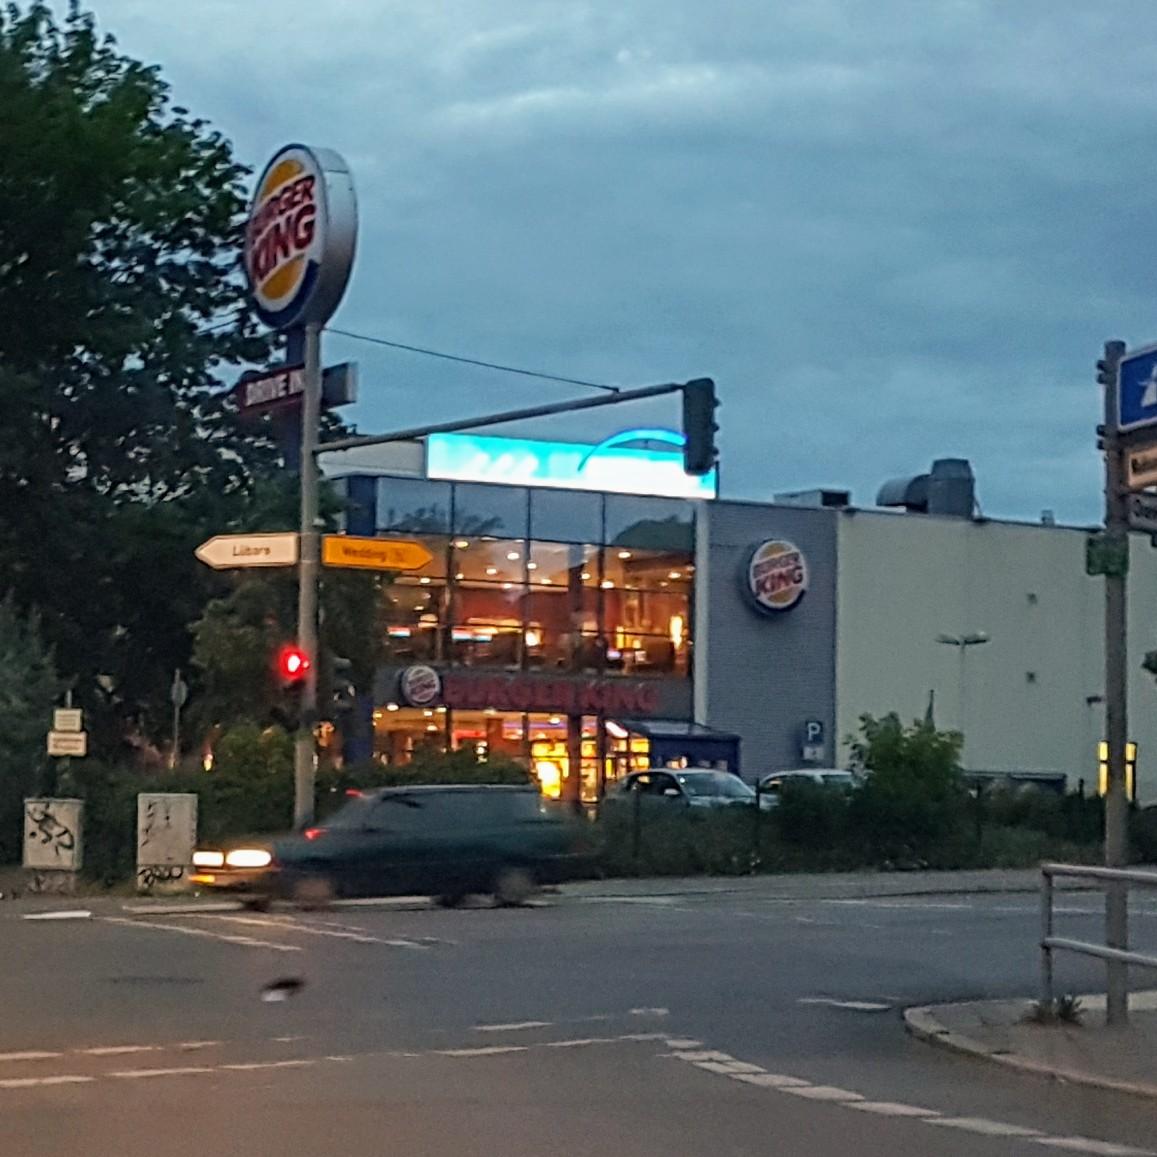 Restaurant "Burger King" in Berlin